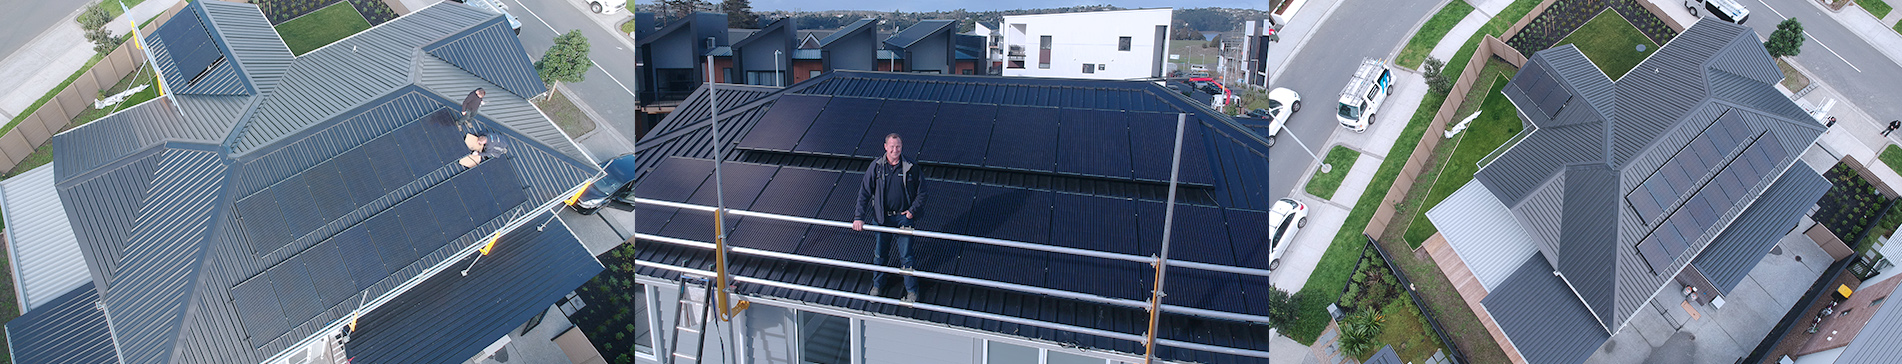 Residential solar - Hobsonville Solar Energy - Trilect Solar Auckland